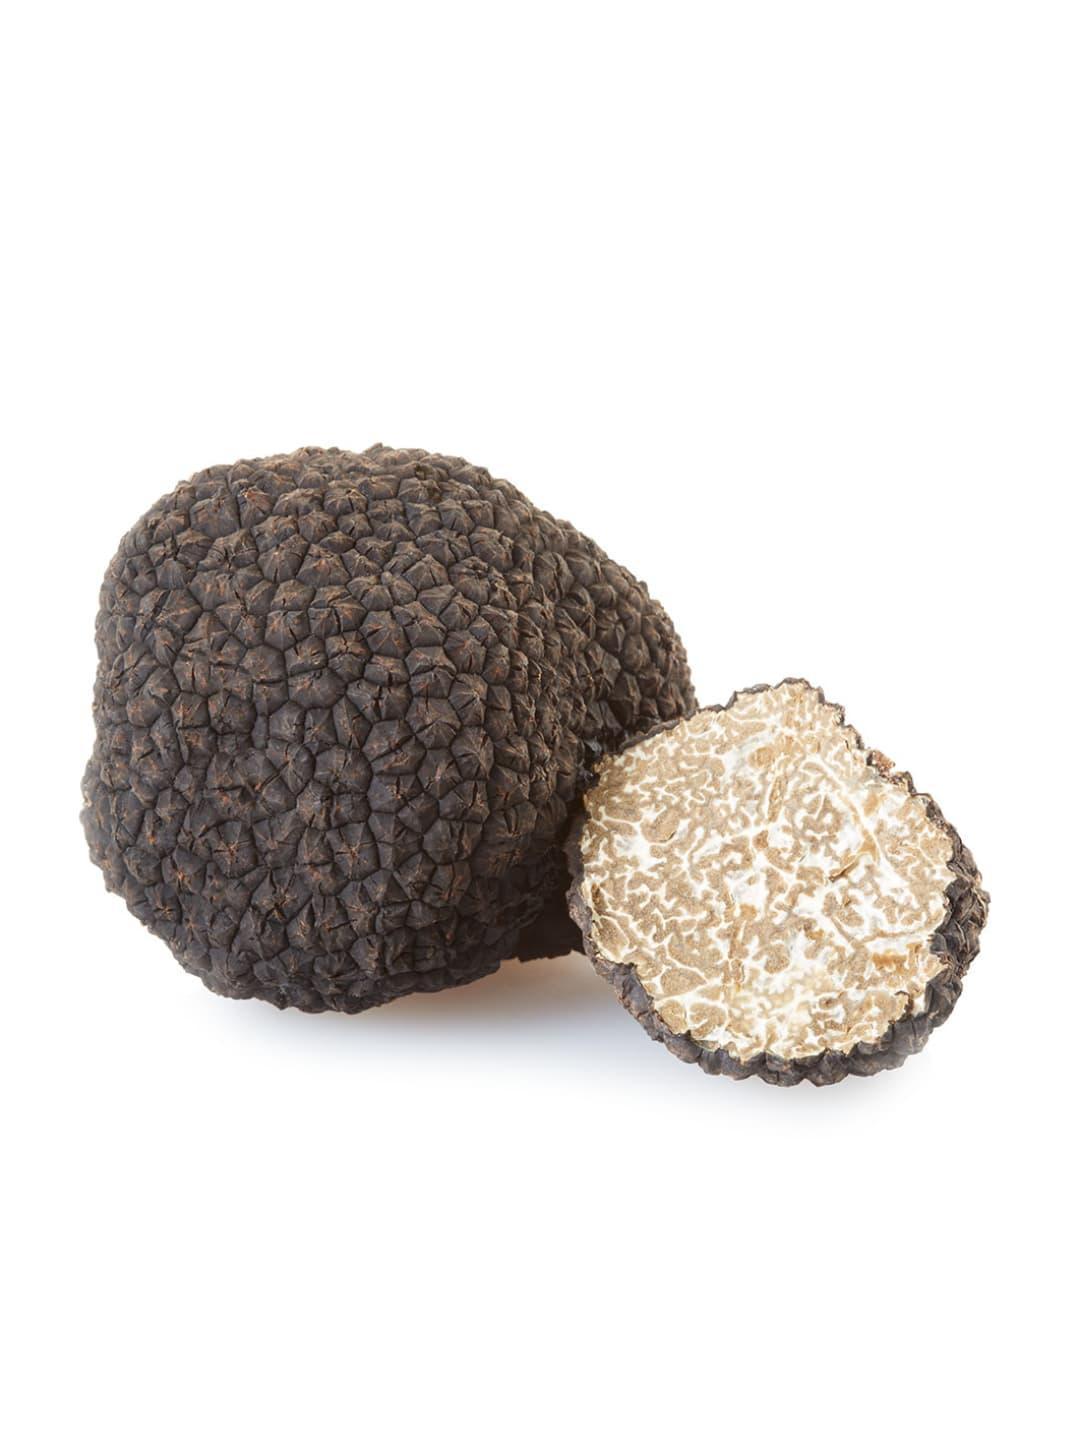 fresh black autumn truffle (tuber uncinatum chatin) 500 gr / 17_6 oz